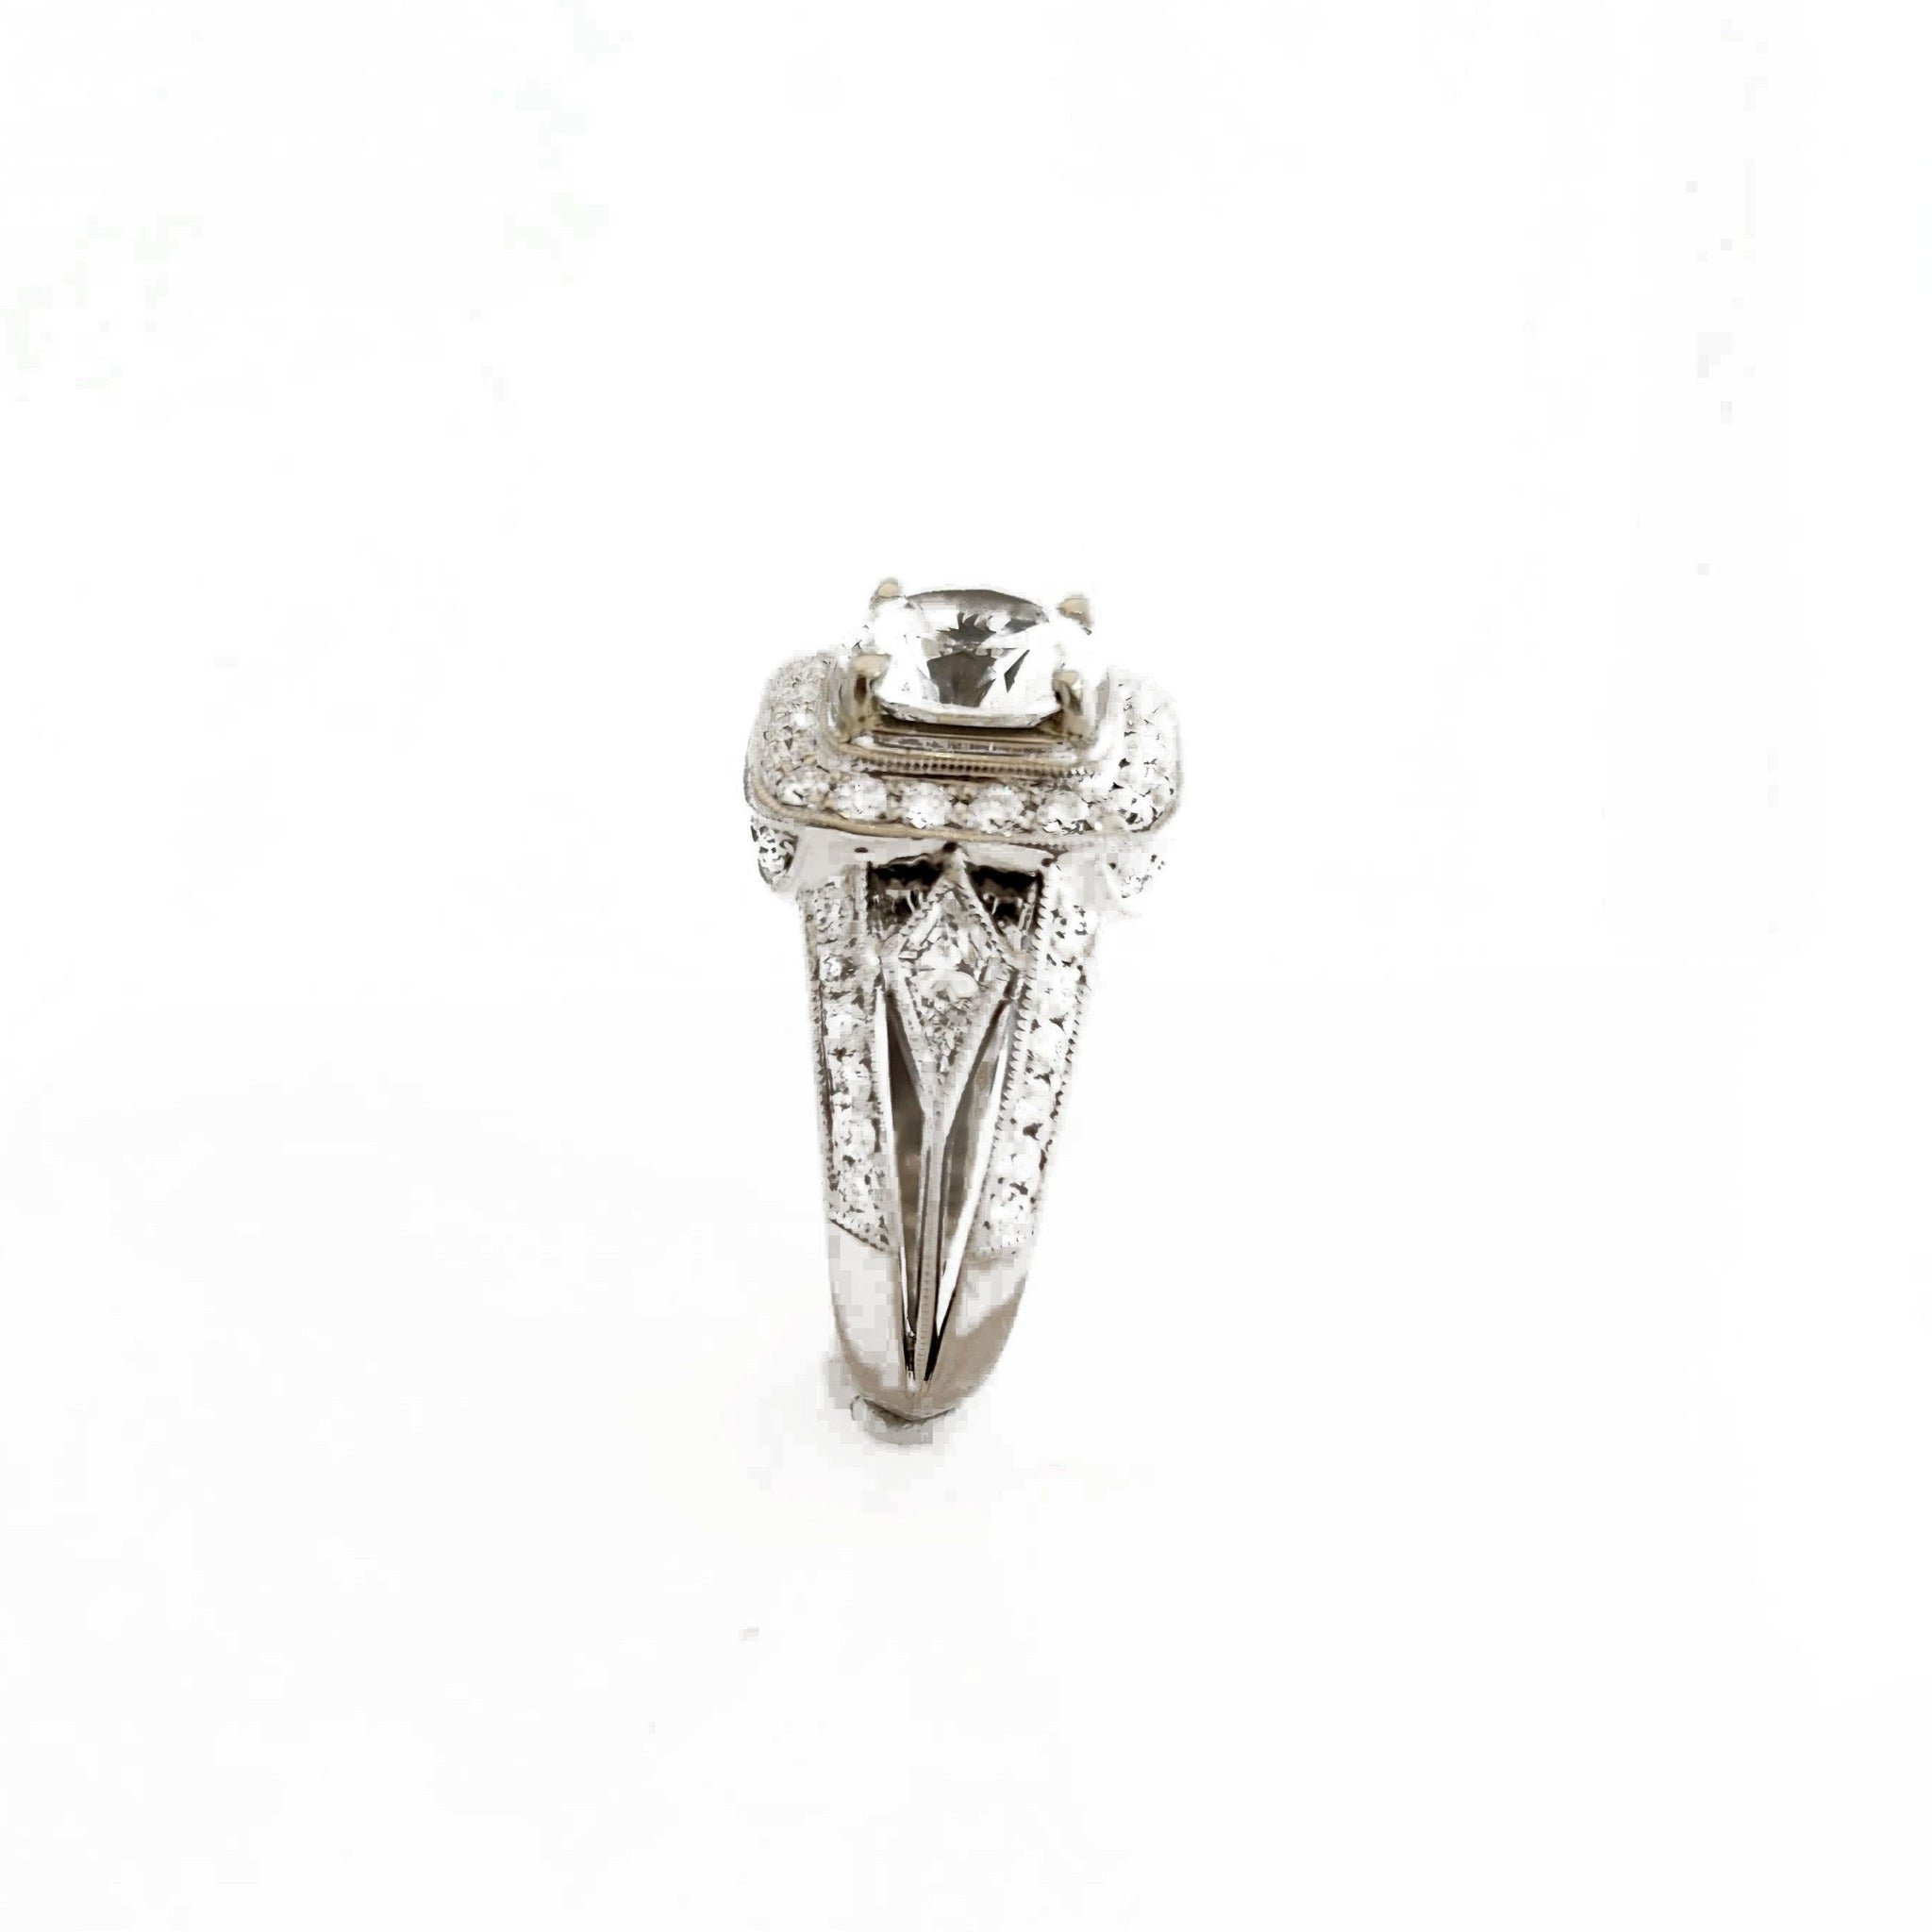 18K White Gold Semi-Mount Engagement Ring